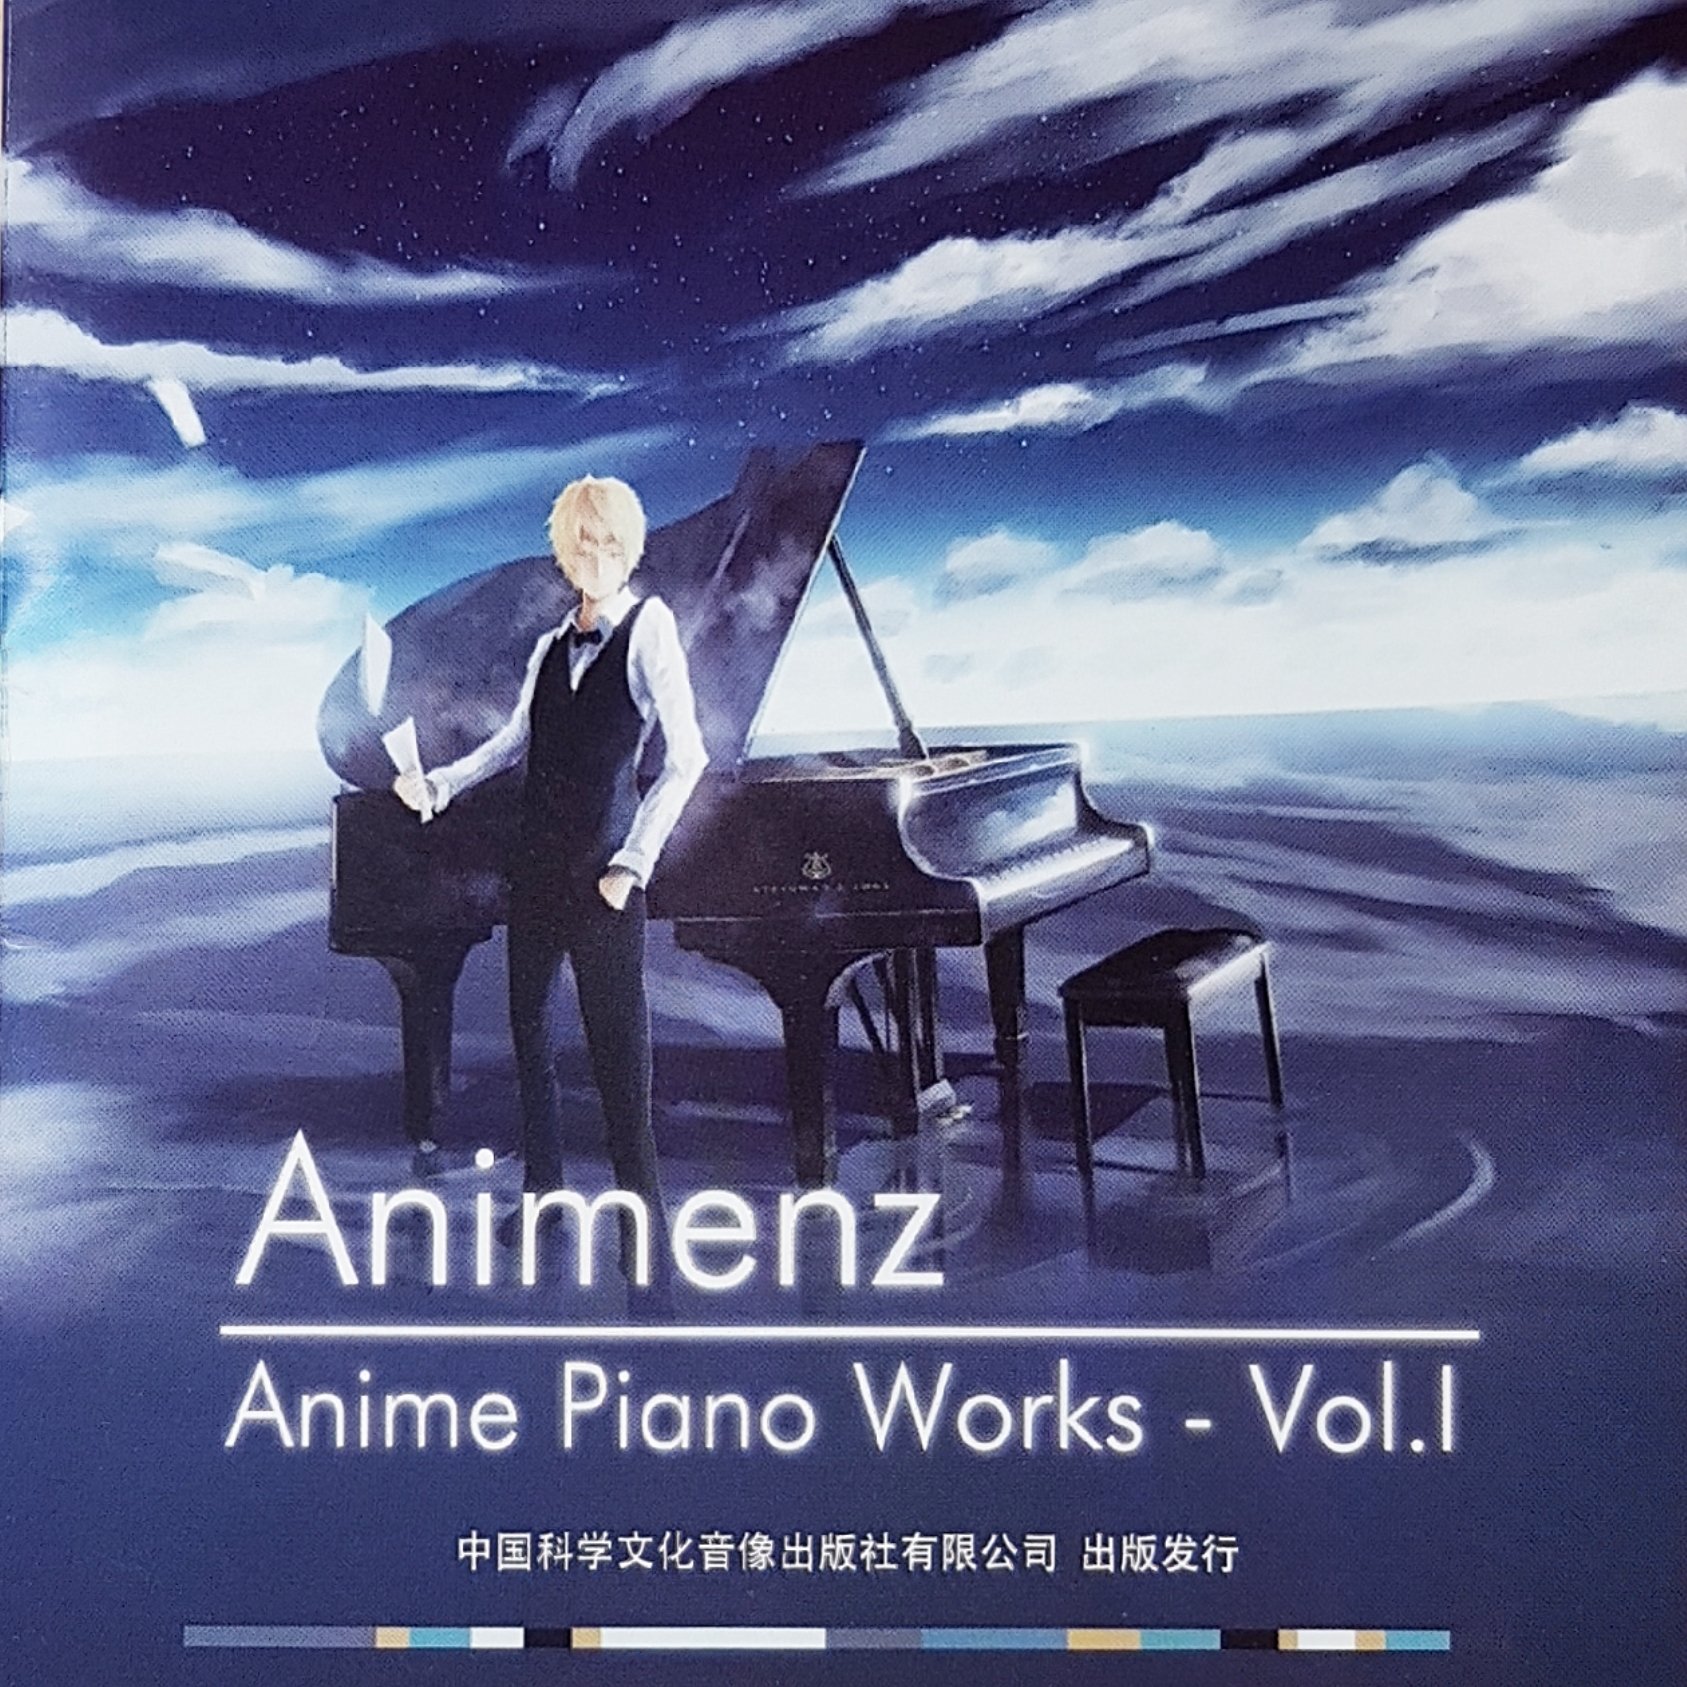 Anime Piano Works Vol. 1 — Animenz | Last.fm